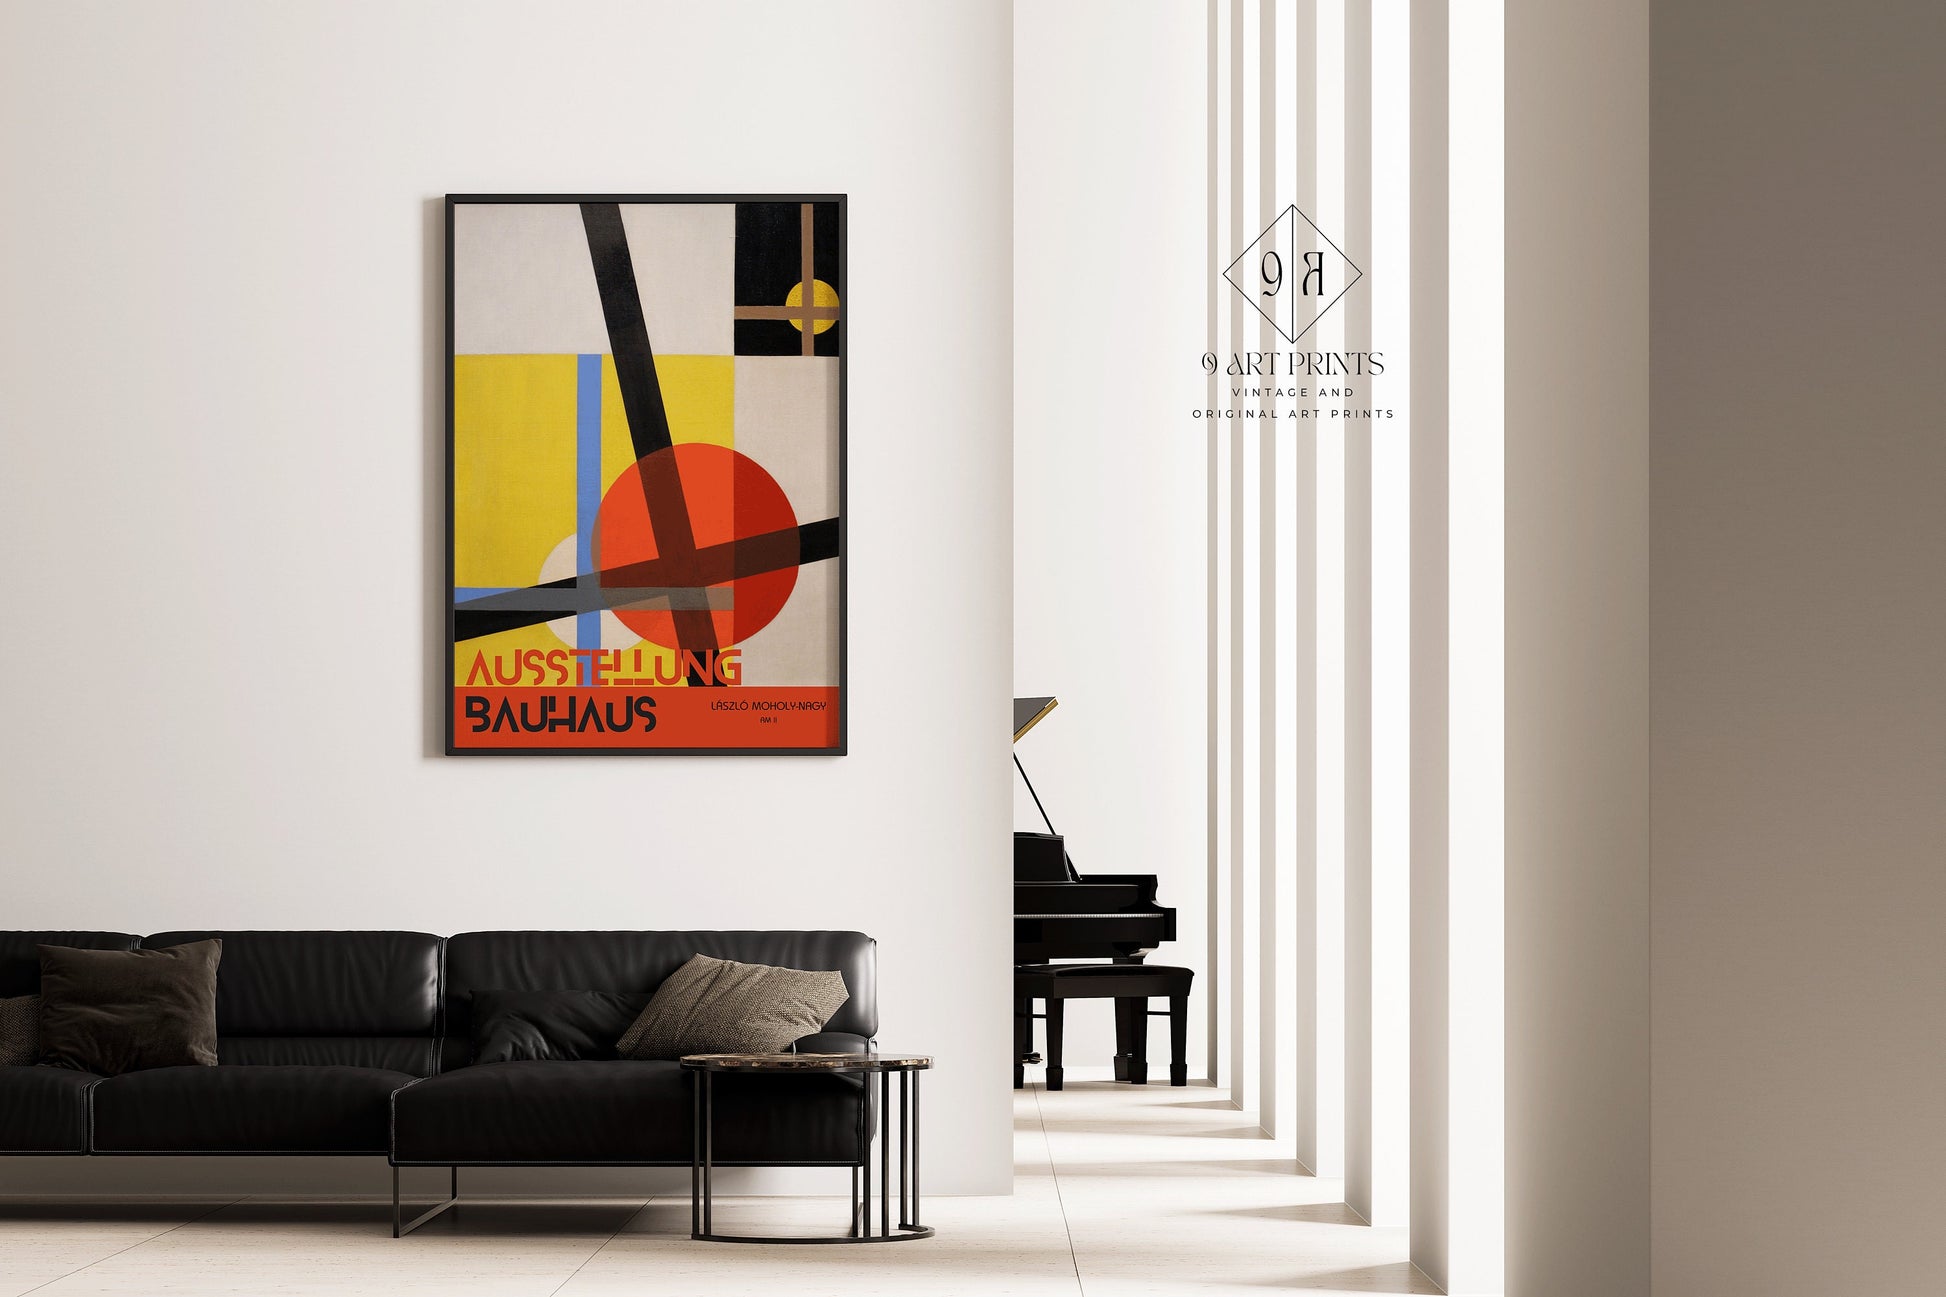 Vintage Bauhaus Exhibition Poster | László Moholy-Nagy - AM 2 (available framed or unframed)